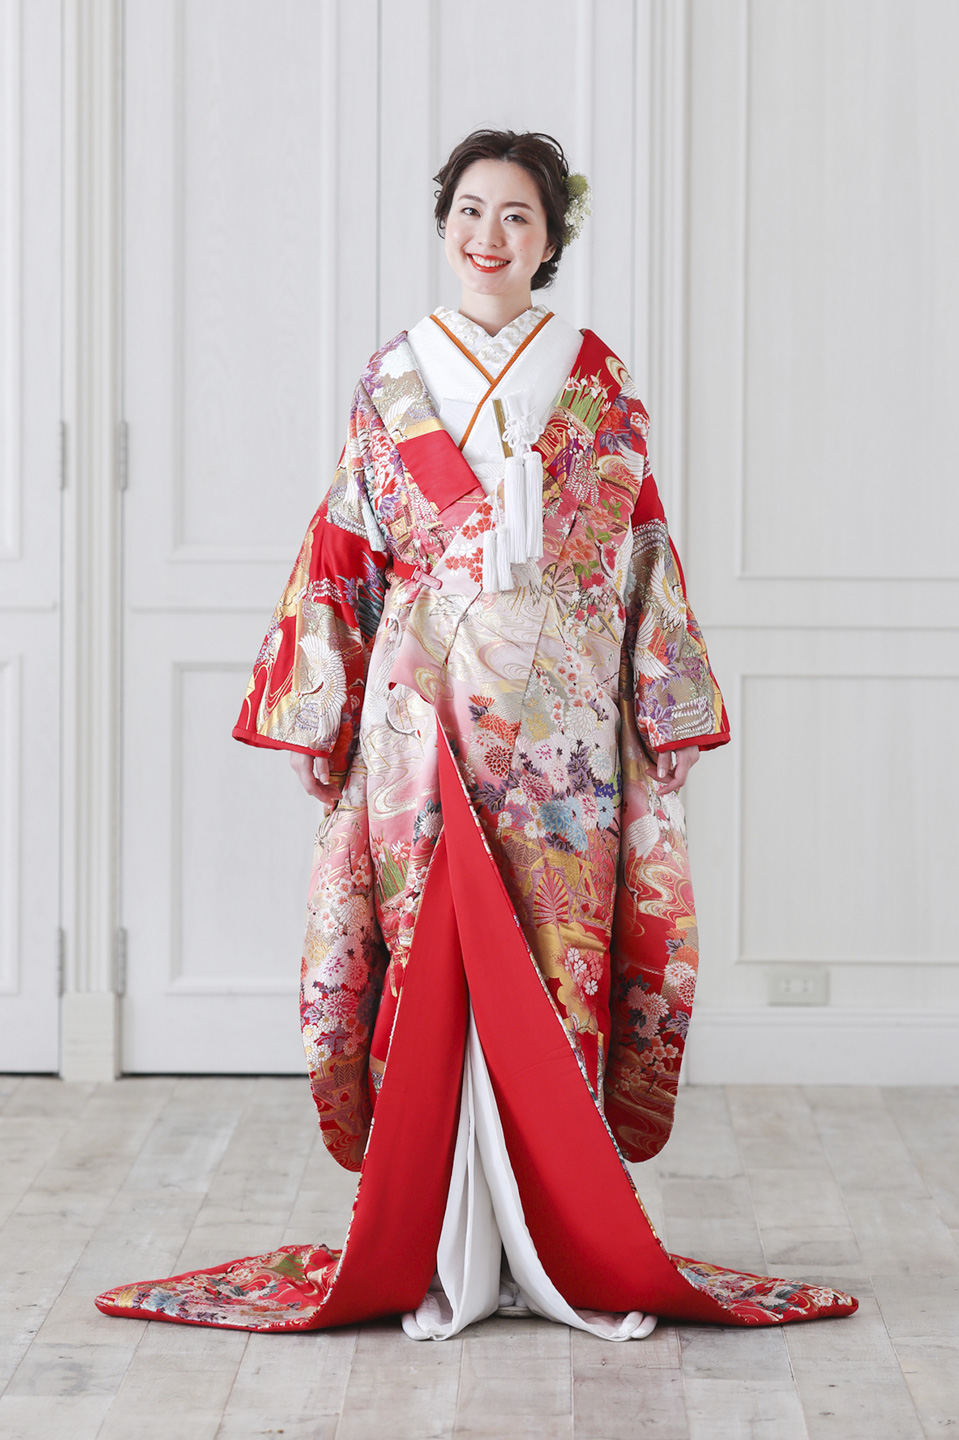 blue japanese wedding kimono